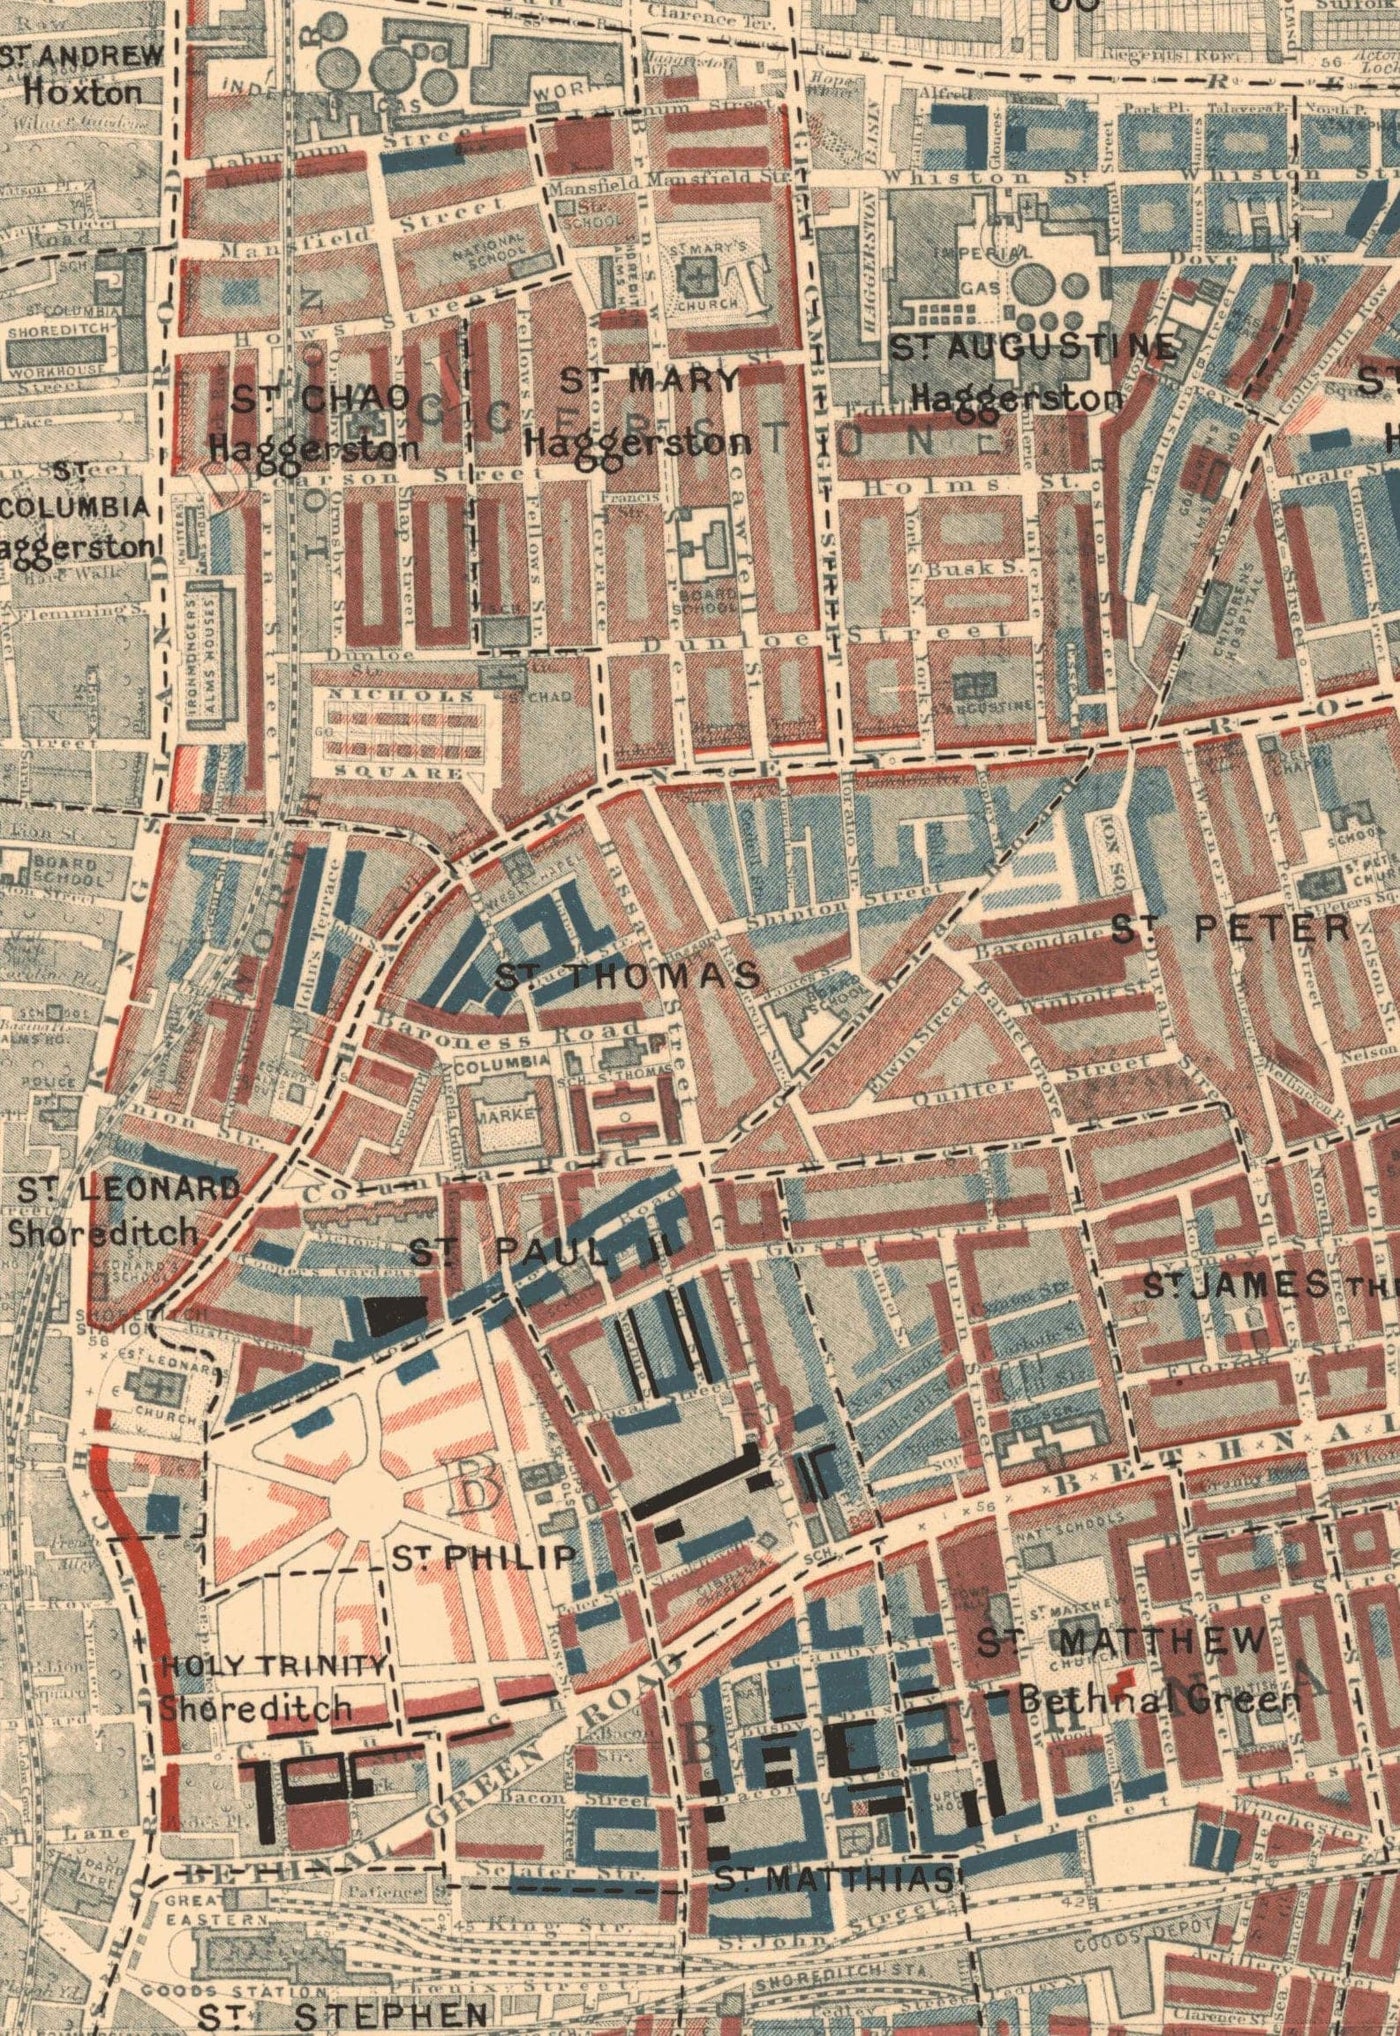 Karte der Londoner Armut 1898-9, East Central District, von Charles Booth - Hackney, Shoreditch, Tower Hamlets - E2, E1, E1W, EC2, EC3